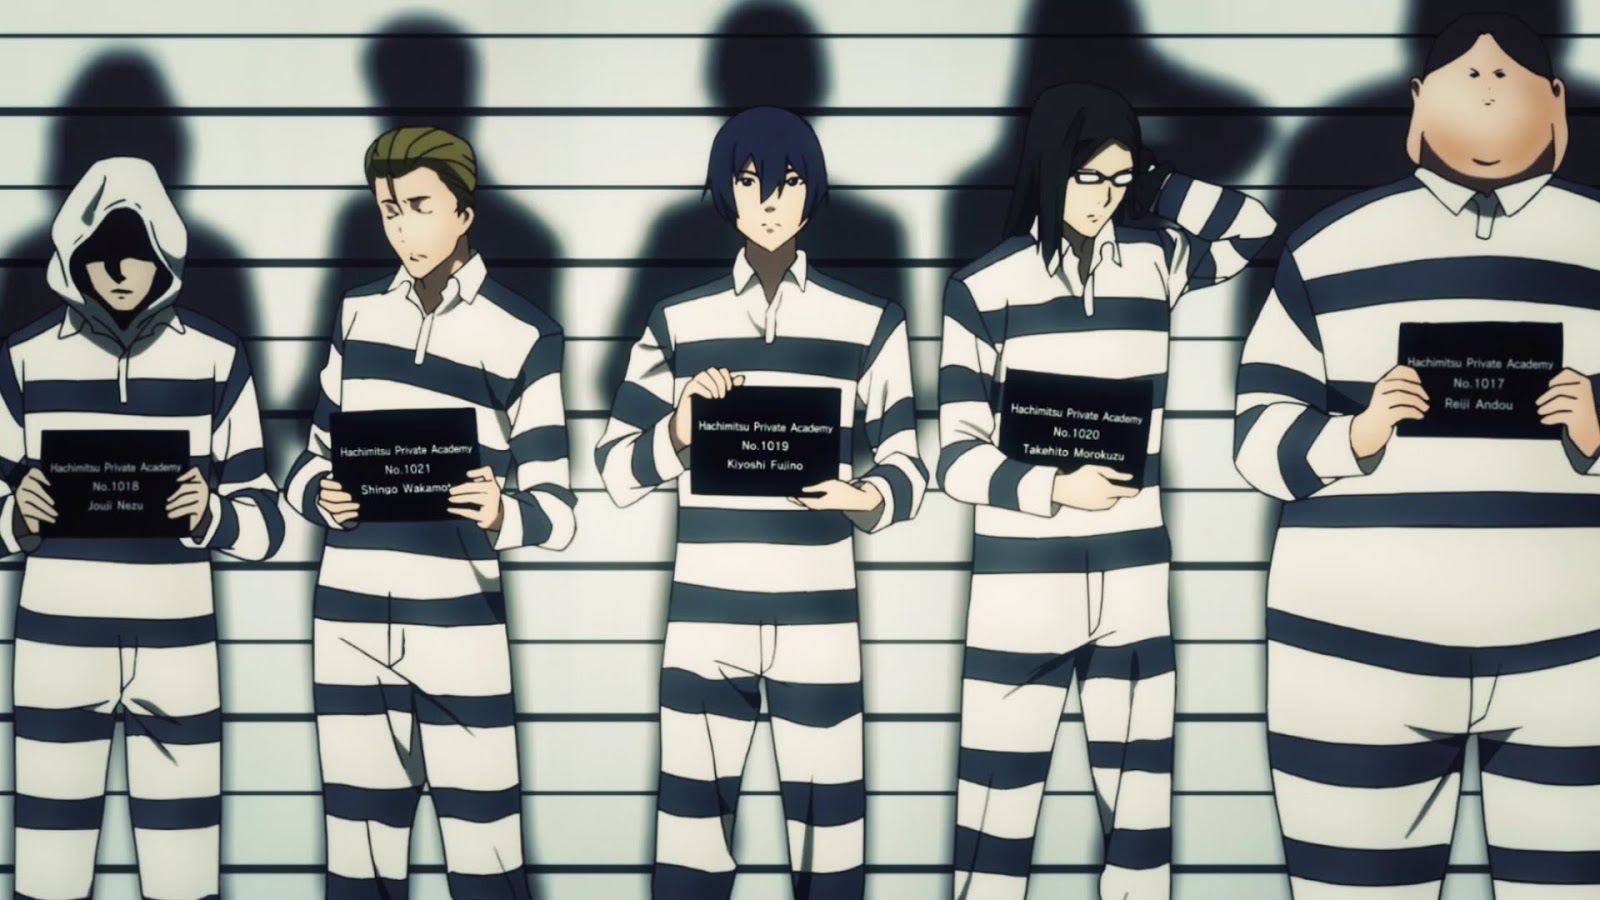 Prison School anime